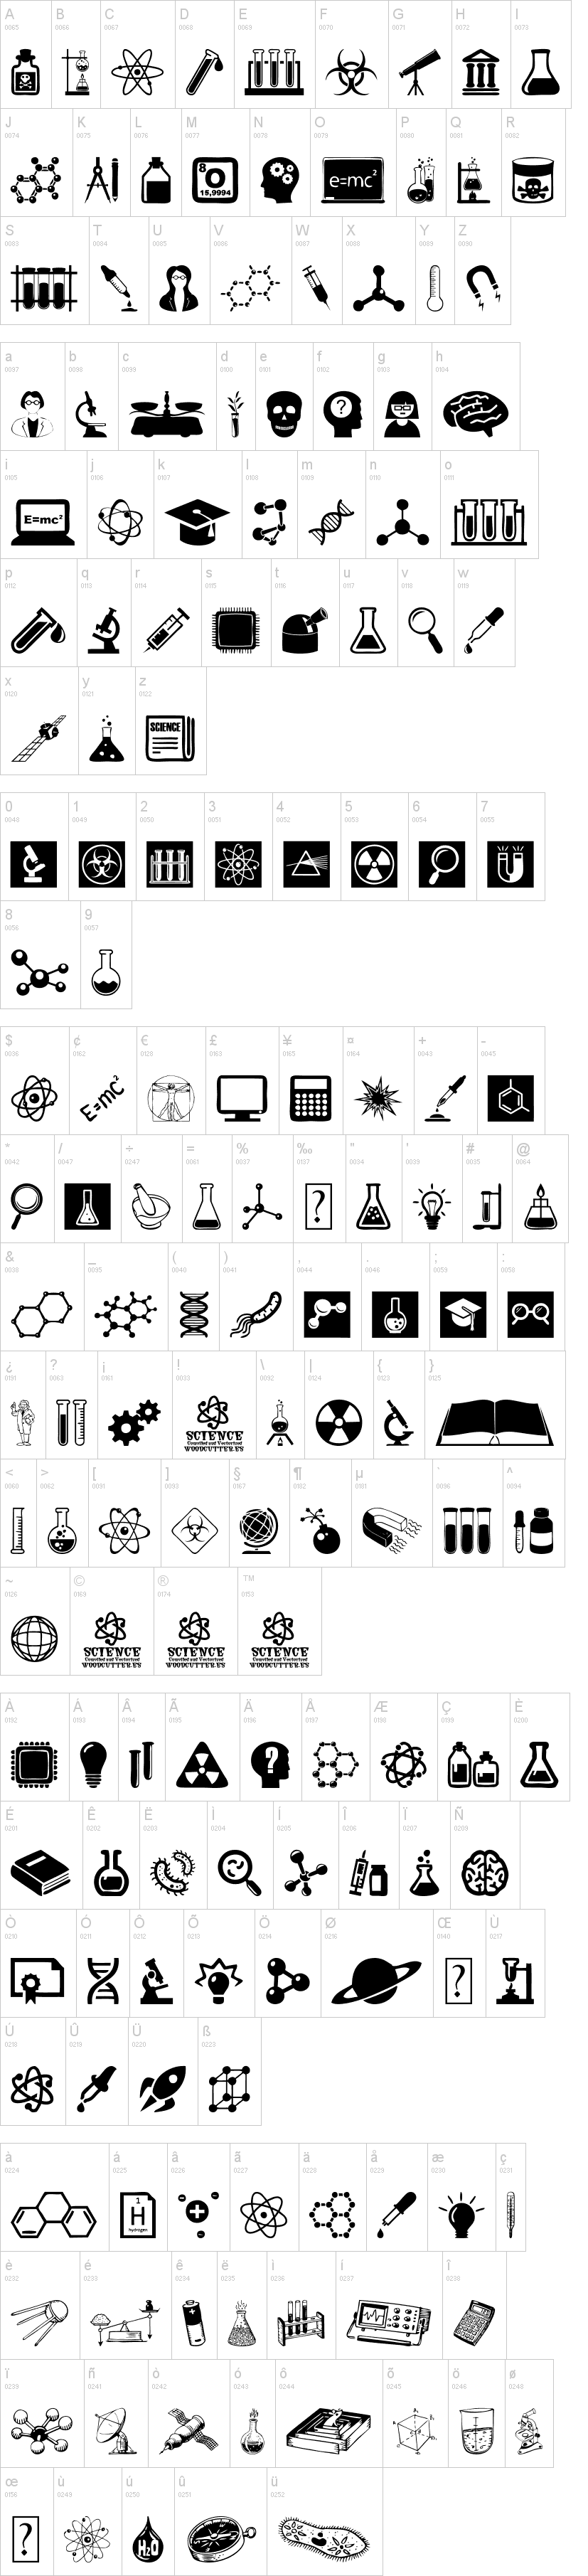 Science Icons Font | dafont.com